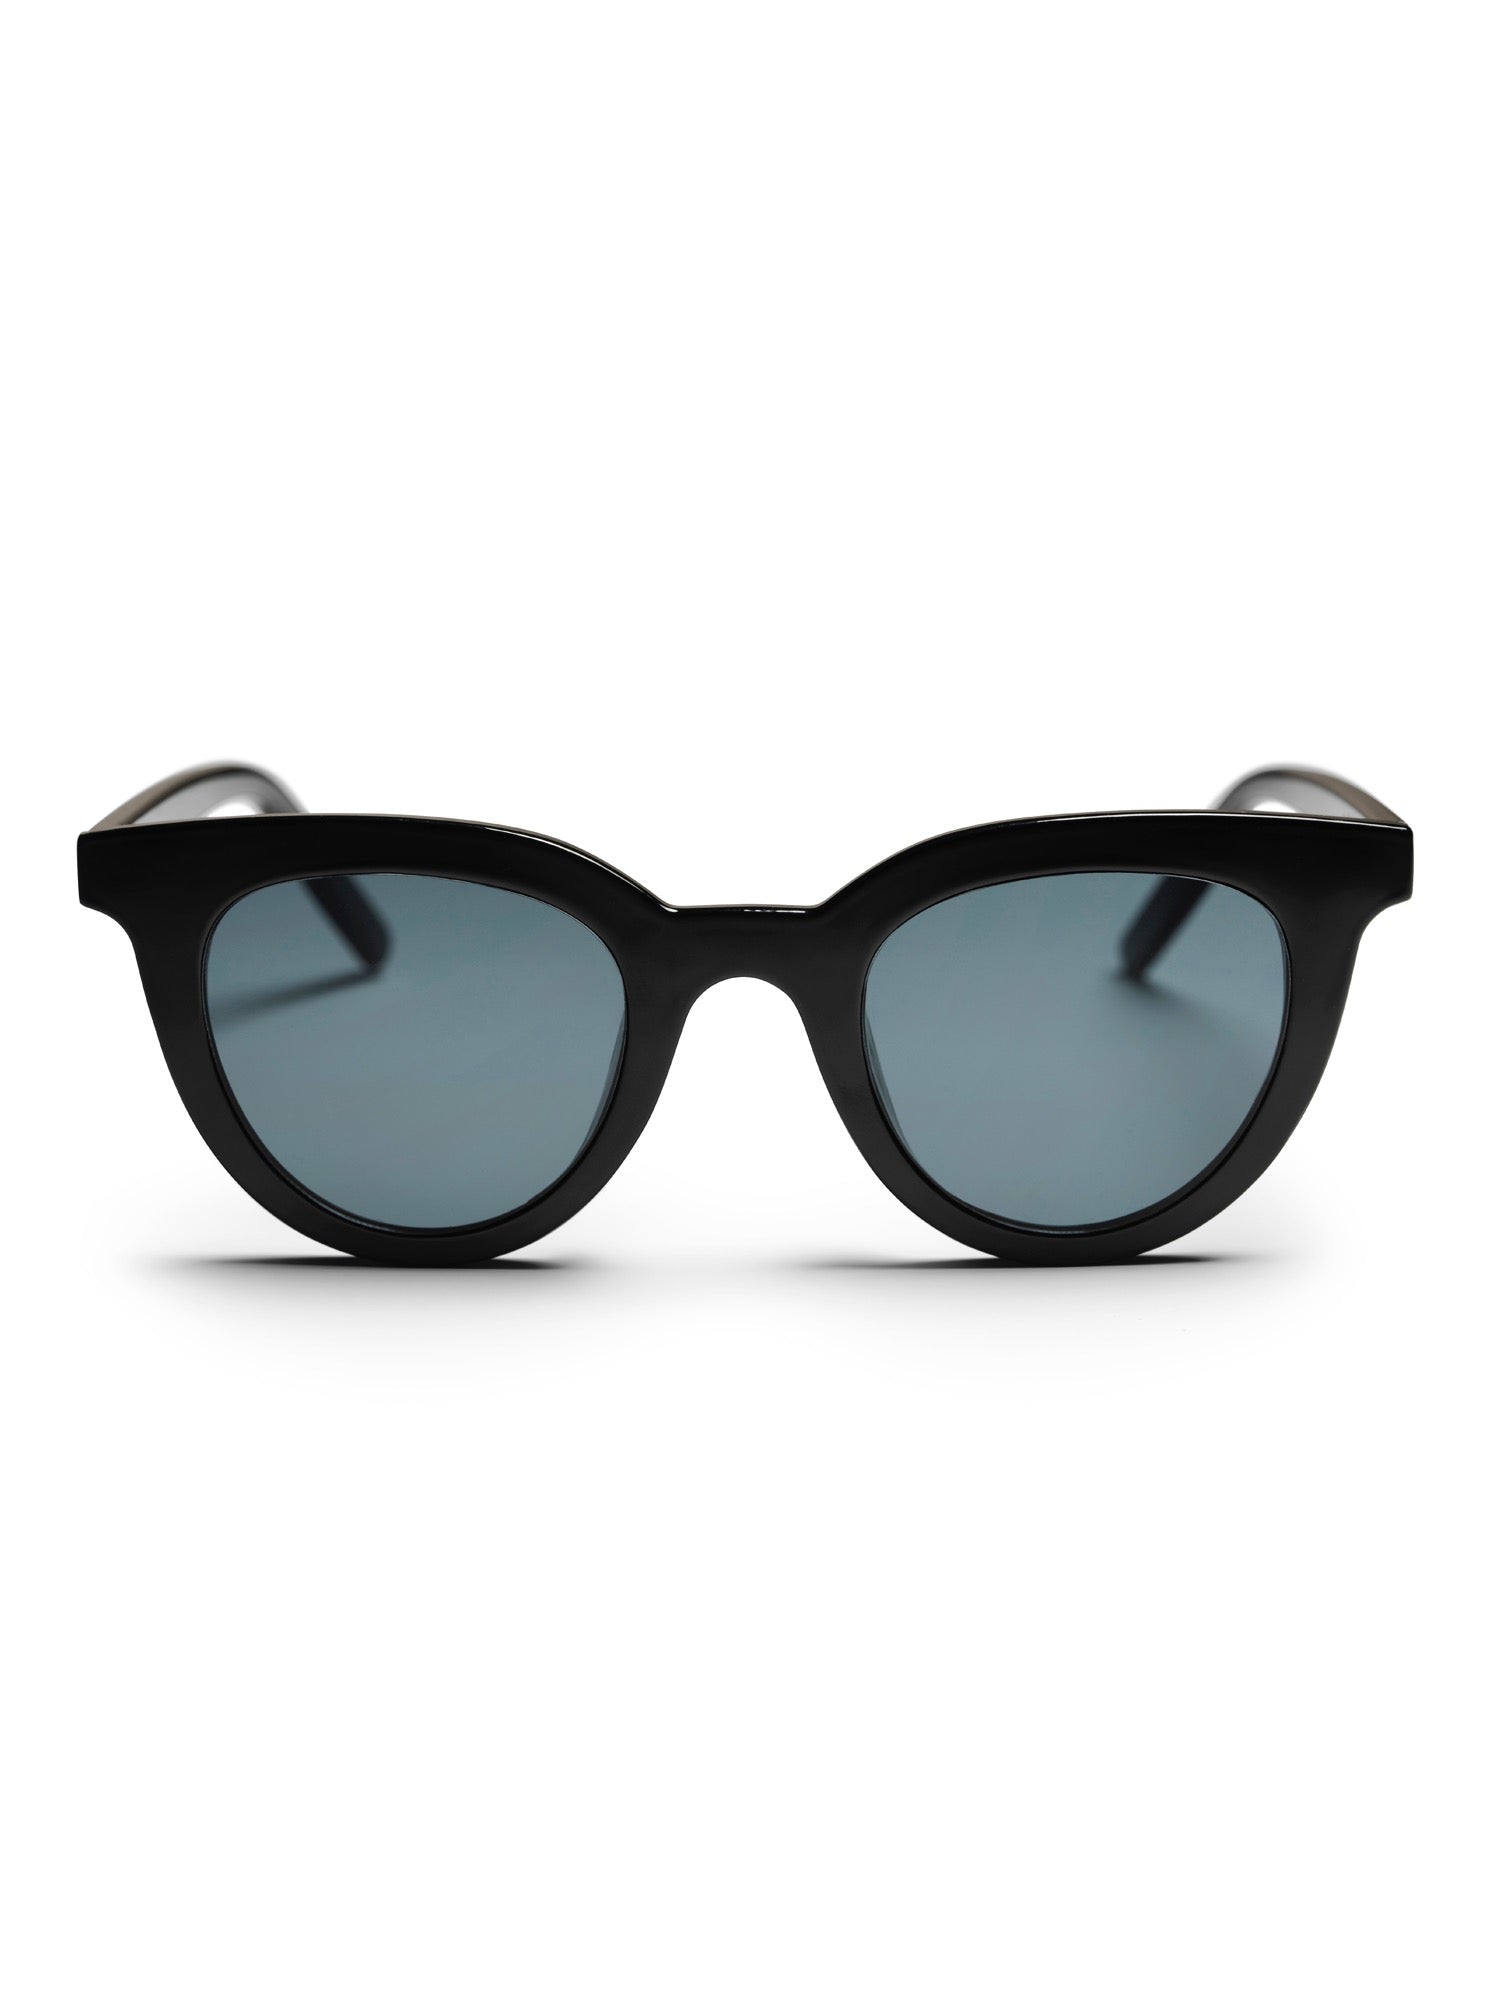 CHPO Långholmen Sunglasses - Recycled Plastic Black / Black Sunglasses